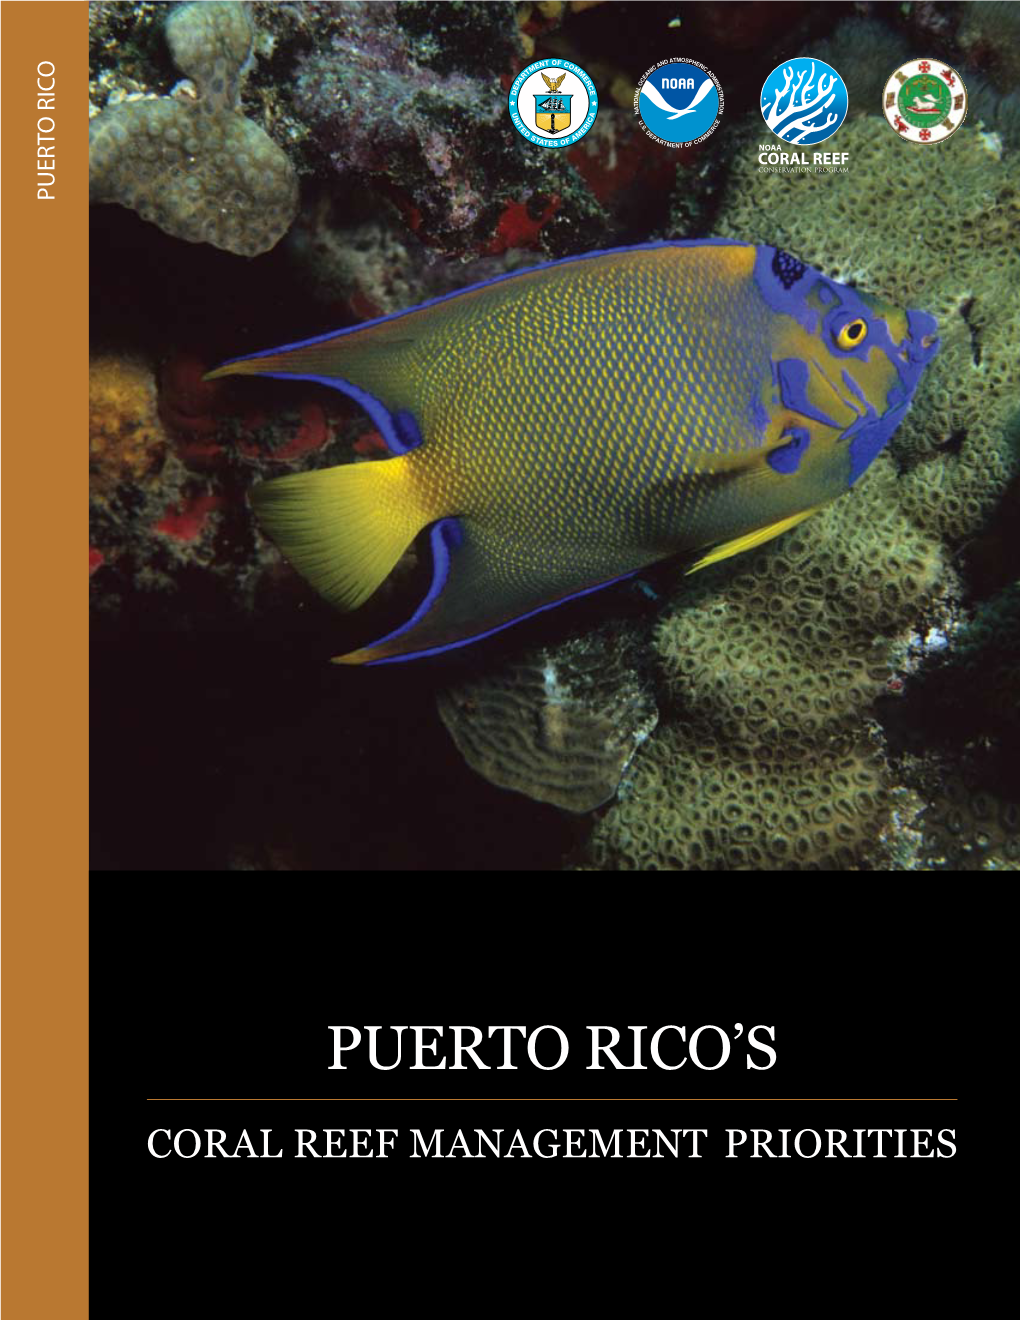 Puerto Rico's Coral Reef Management Priorities